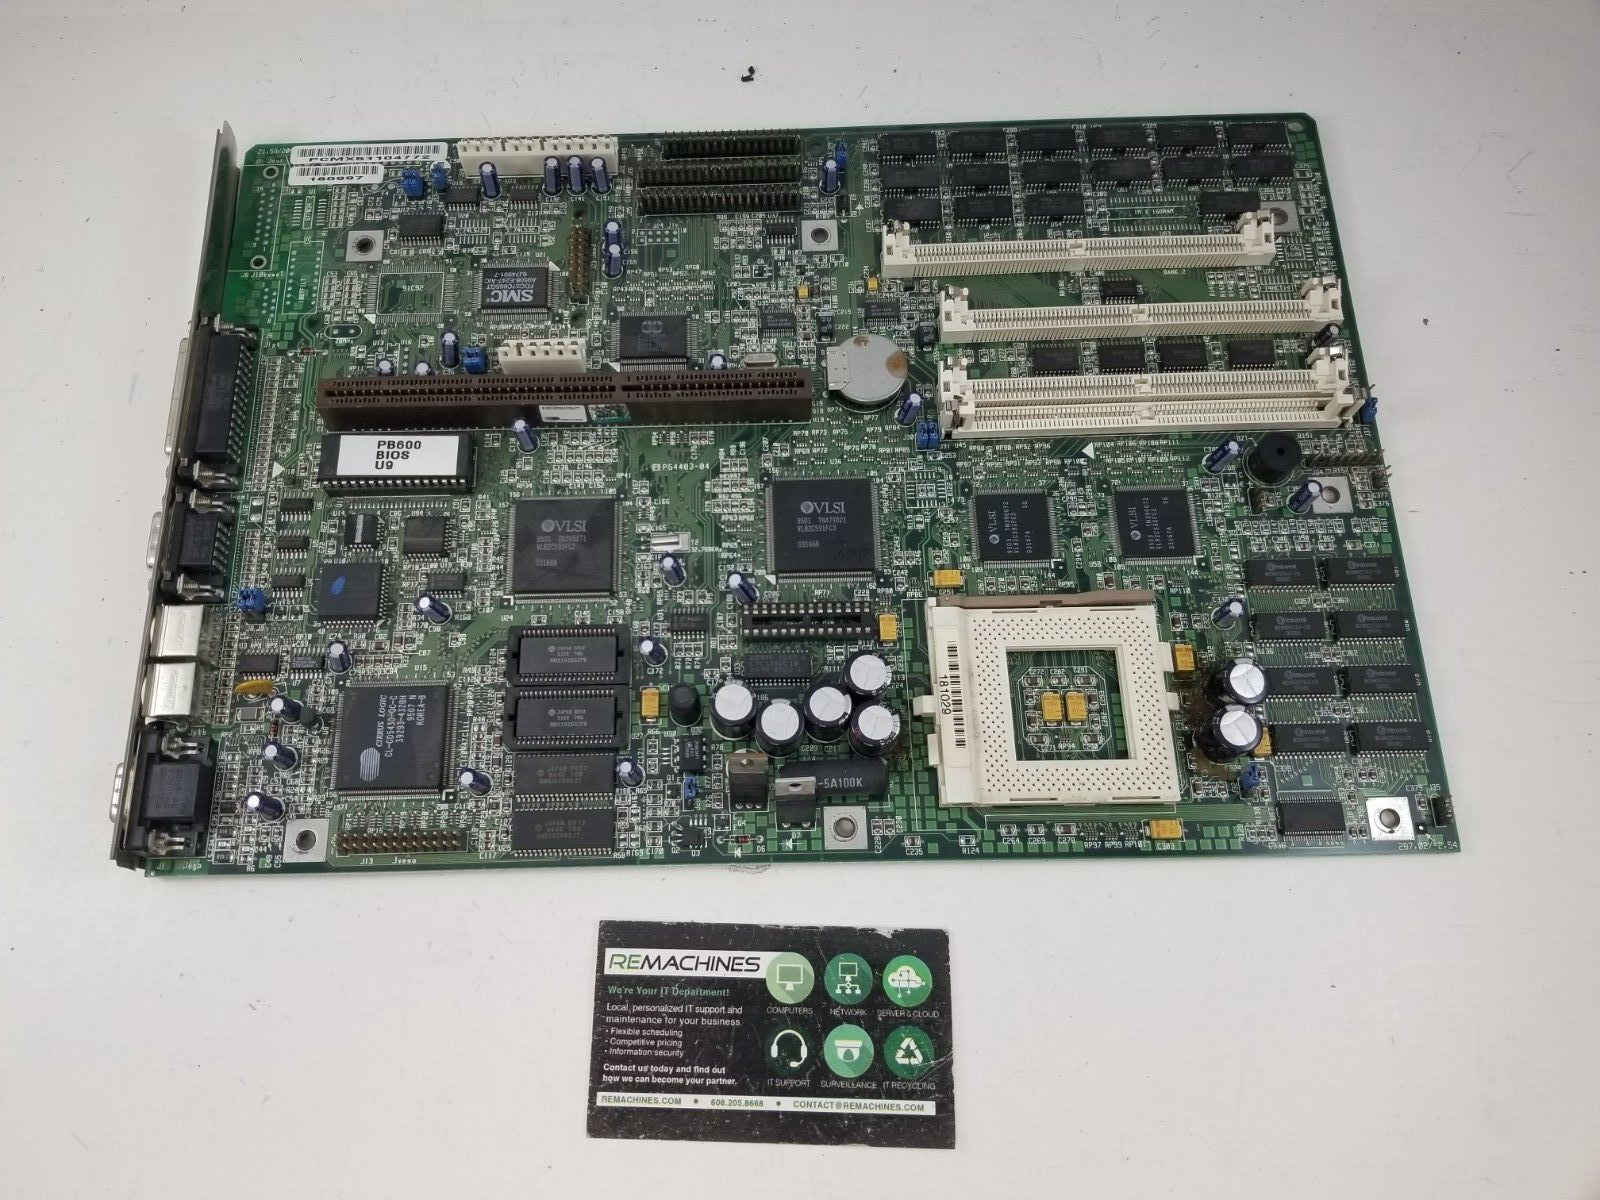 AT&T Globalyst 620/630 FIC PSK-2000 Motherboard PCMX51104772 VLSI 9501 UNTESTED